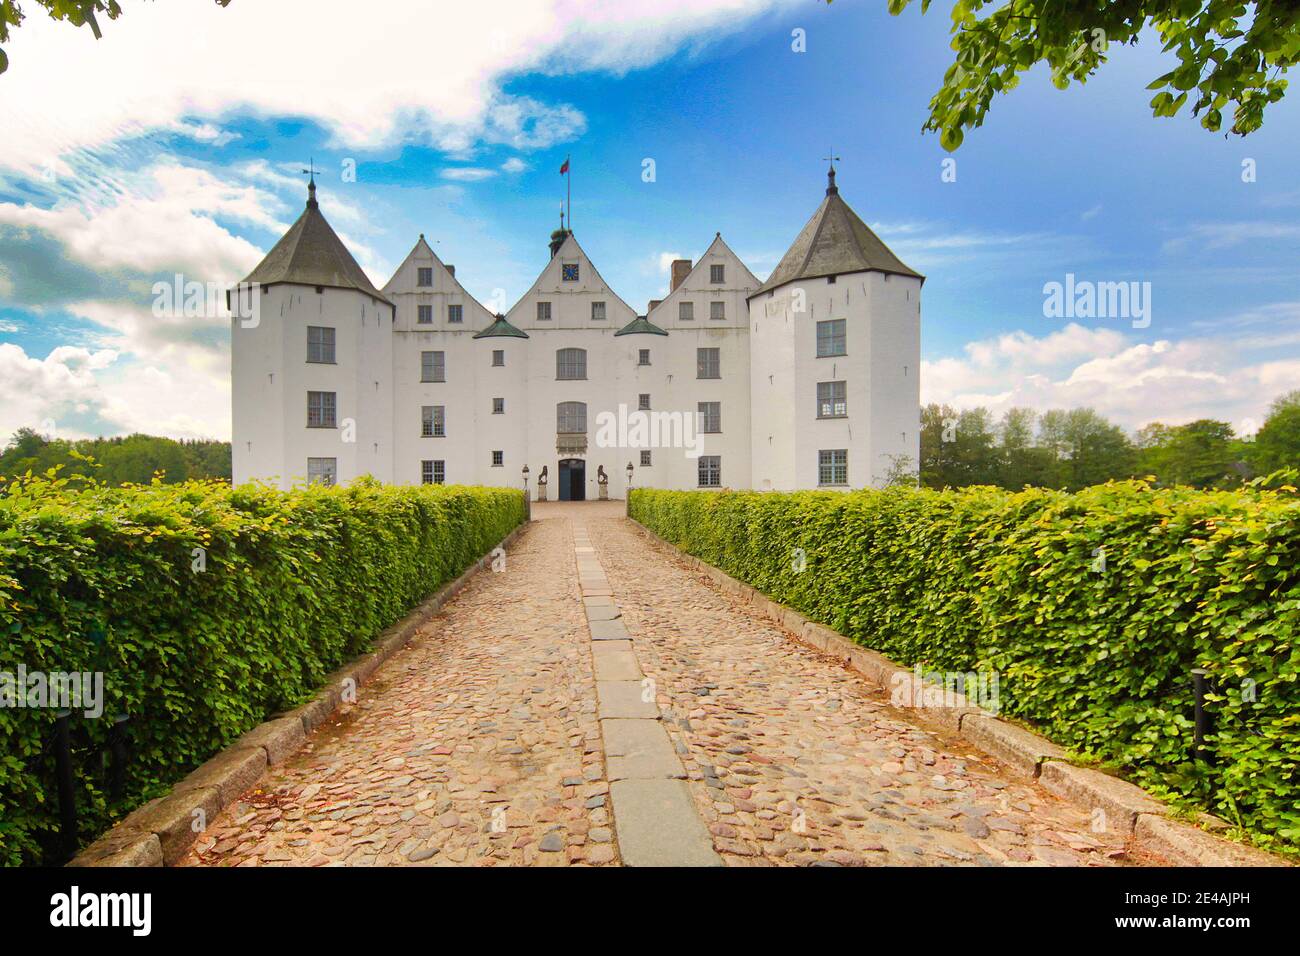 The Castle Glücksburg in Schleswig-Holstein, Germany Stock Photo